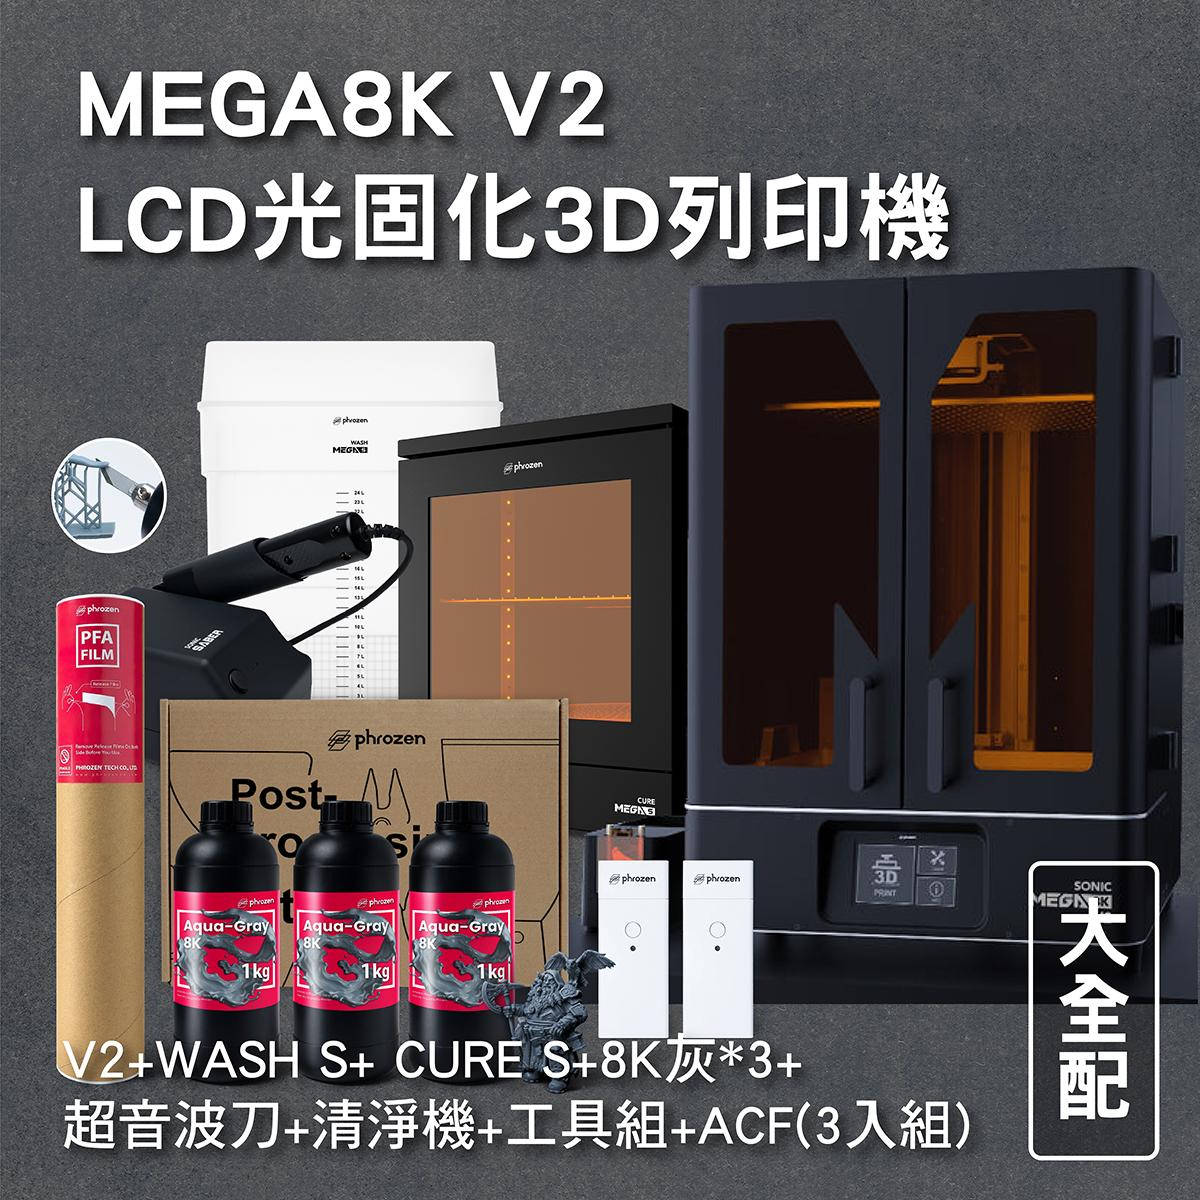 MEGA8K V2 LCD光固化3D列印機 大全配 (V2+WASH S+ CURE S+8K灰*3+超音波刀+清淨機+工具組+ACF(3入組) )